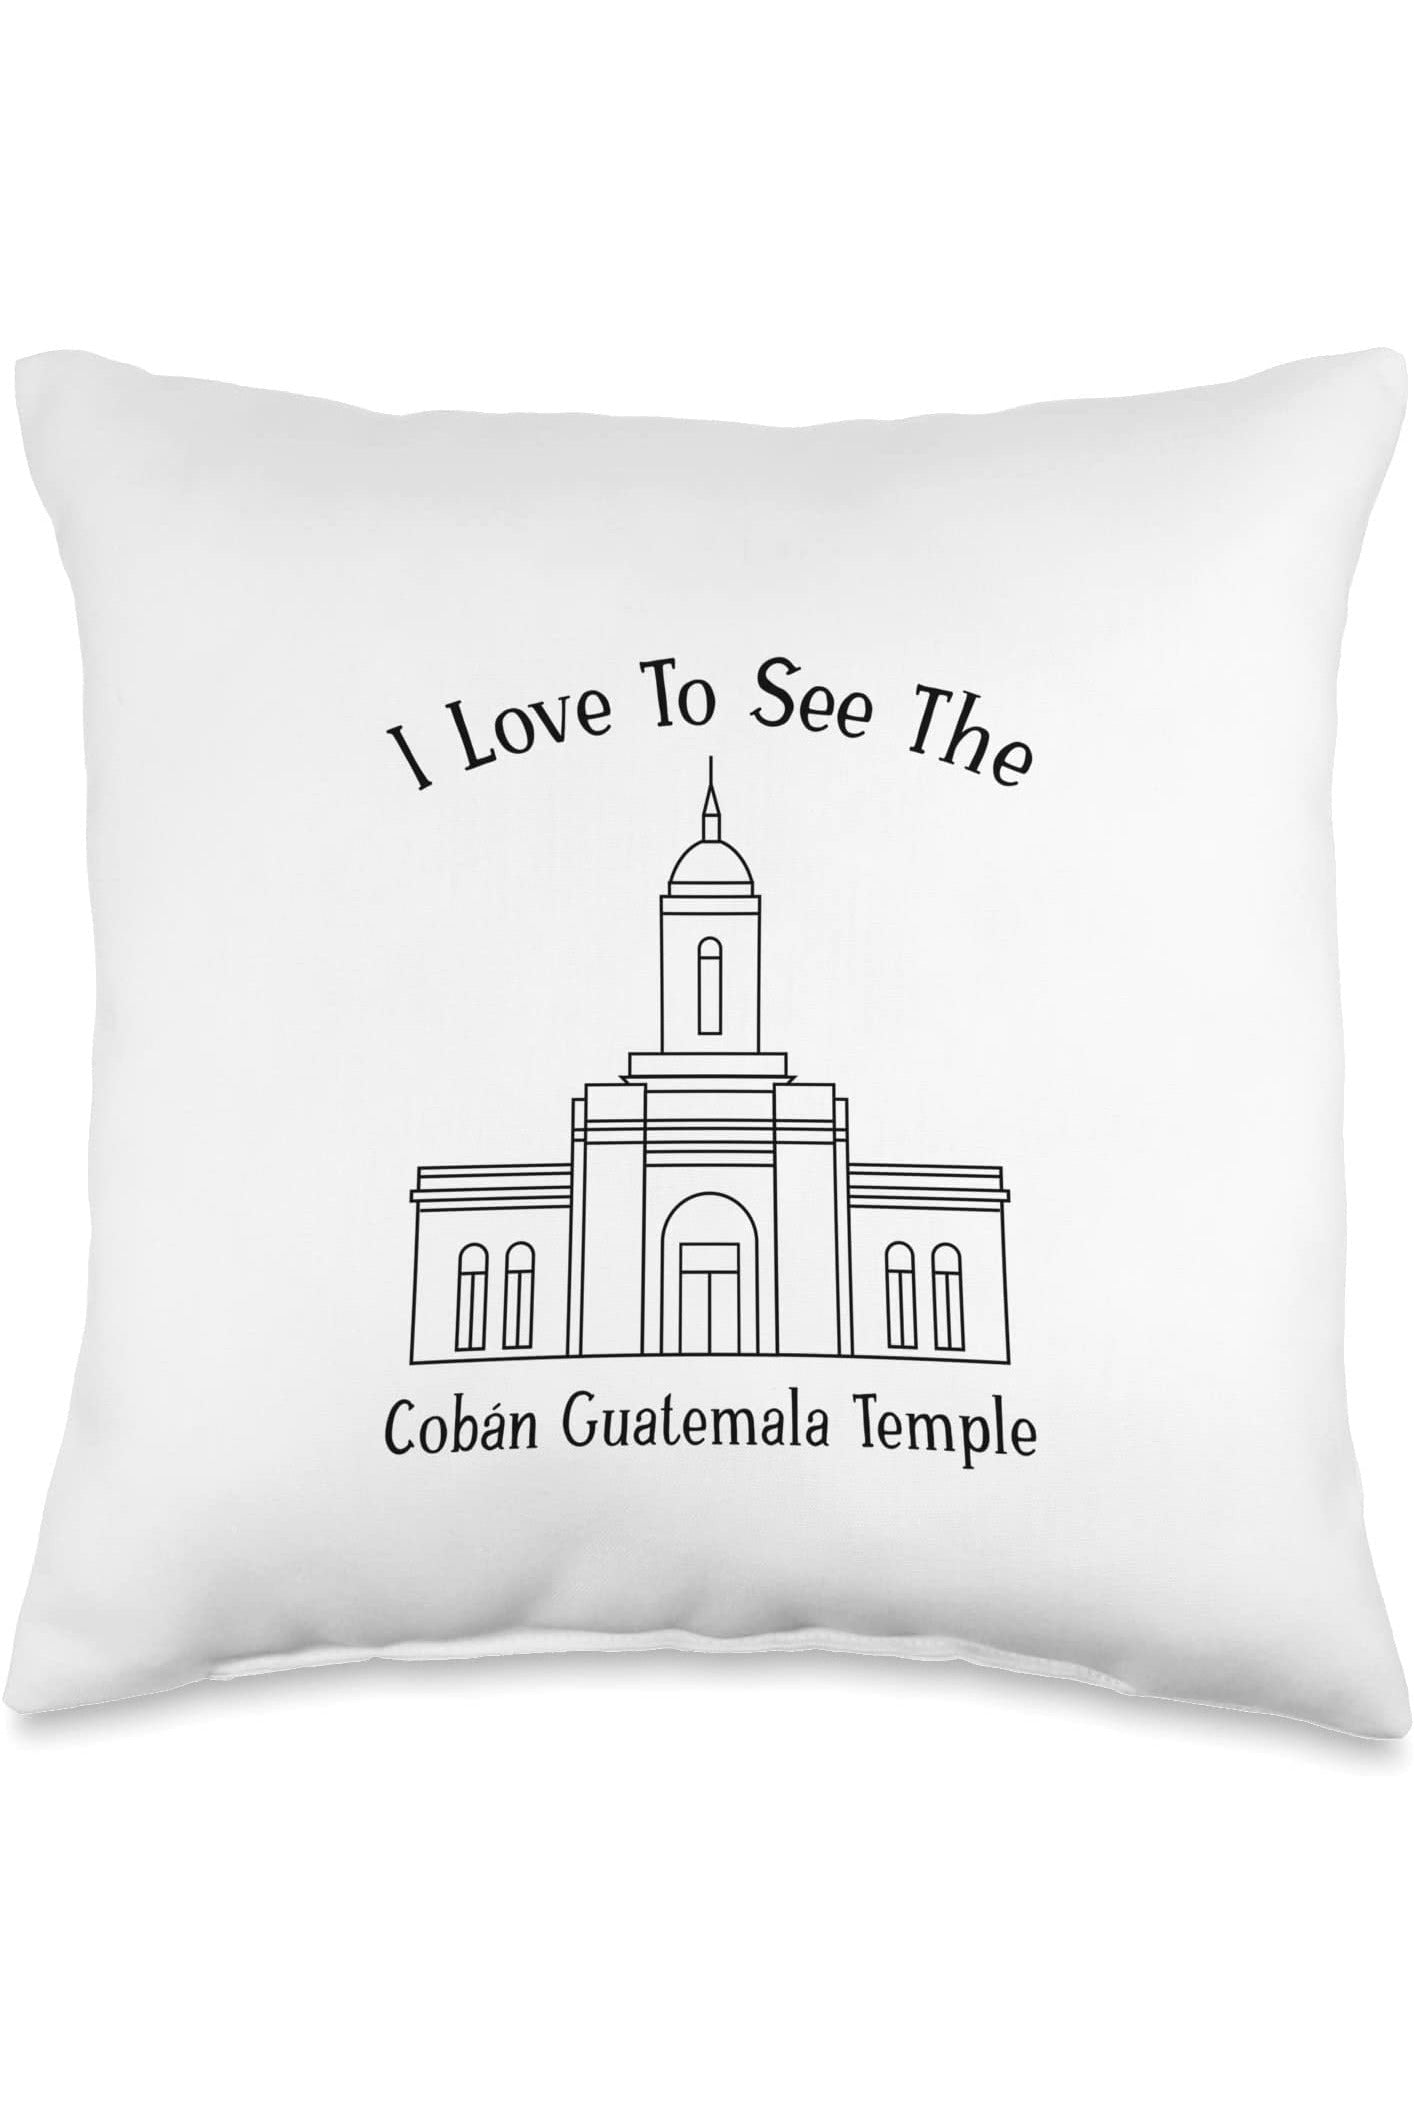 Coban Guatemala Temple Throw Pillows - Happy Style (English) US